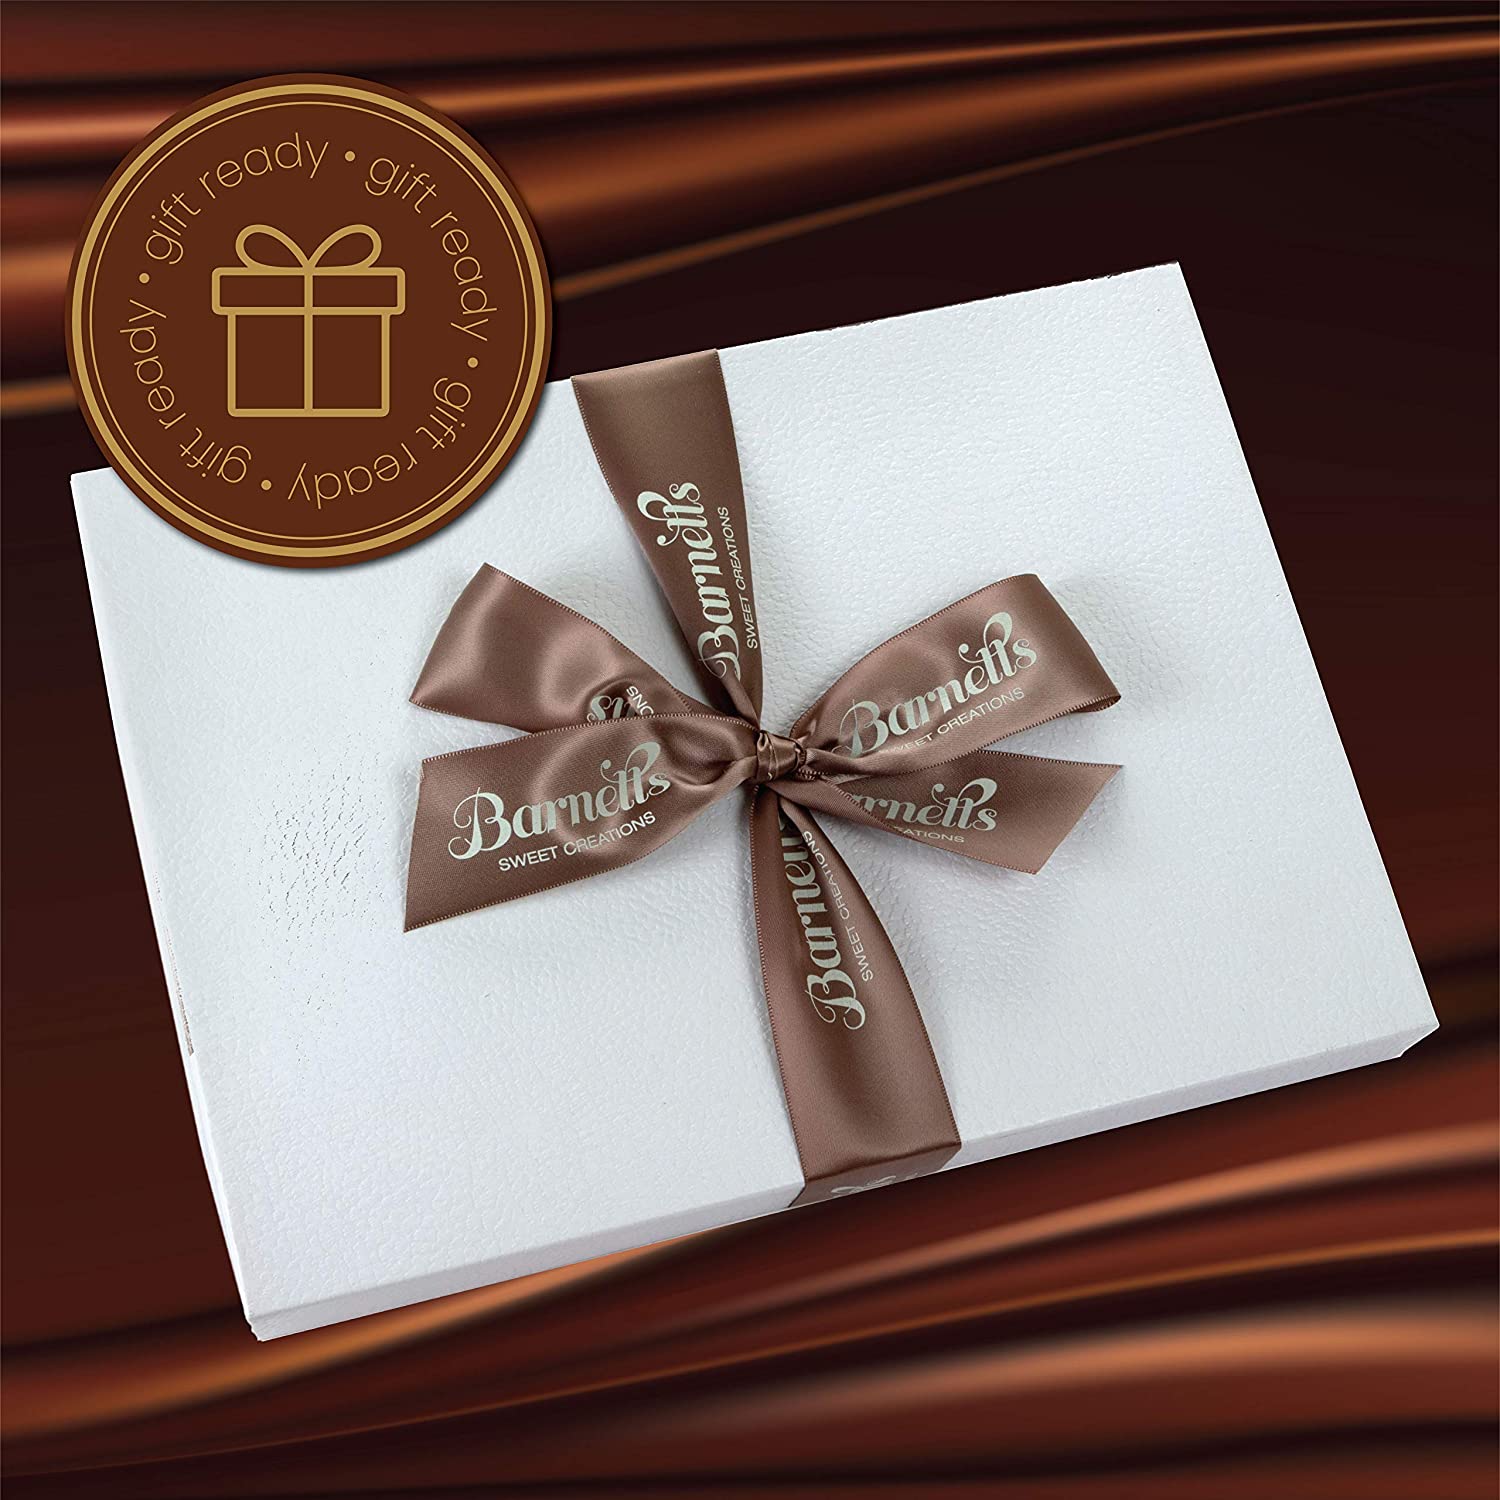 Barnett's Christmas Gifts, Chocolate Cookies Gift Box, 6 Count Sampler - image 4 of 6